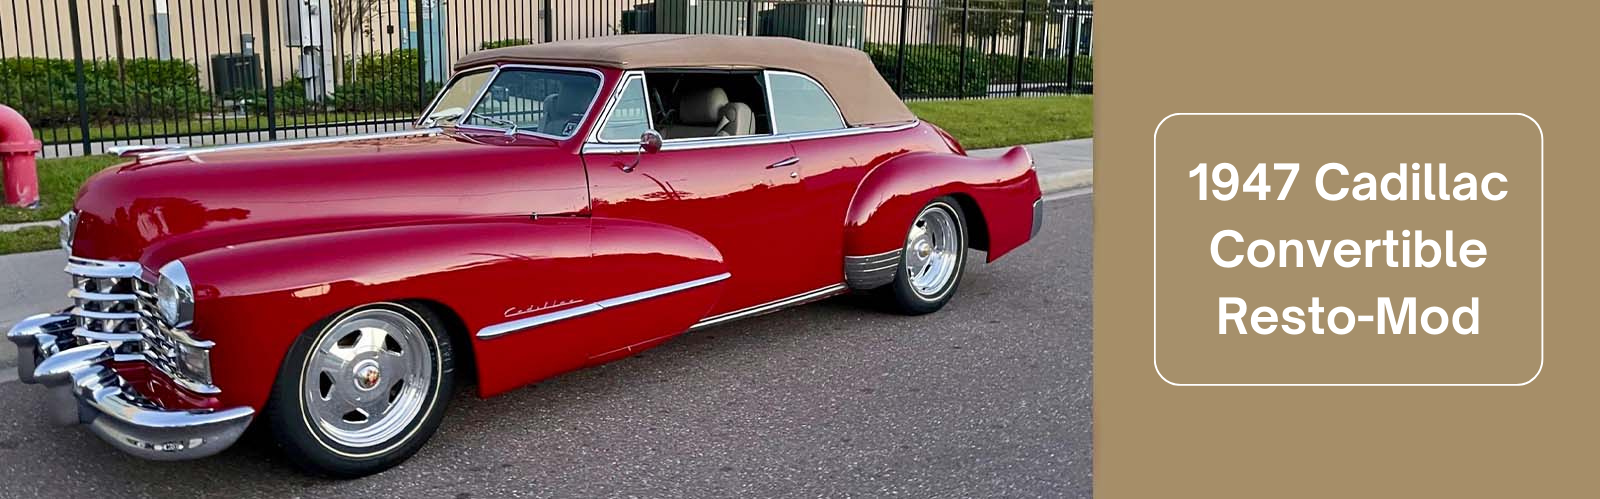 1947 Cadillac Convertible Resto-Mod